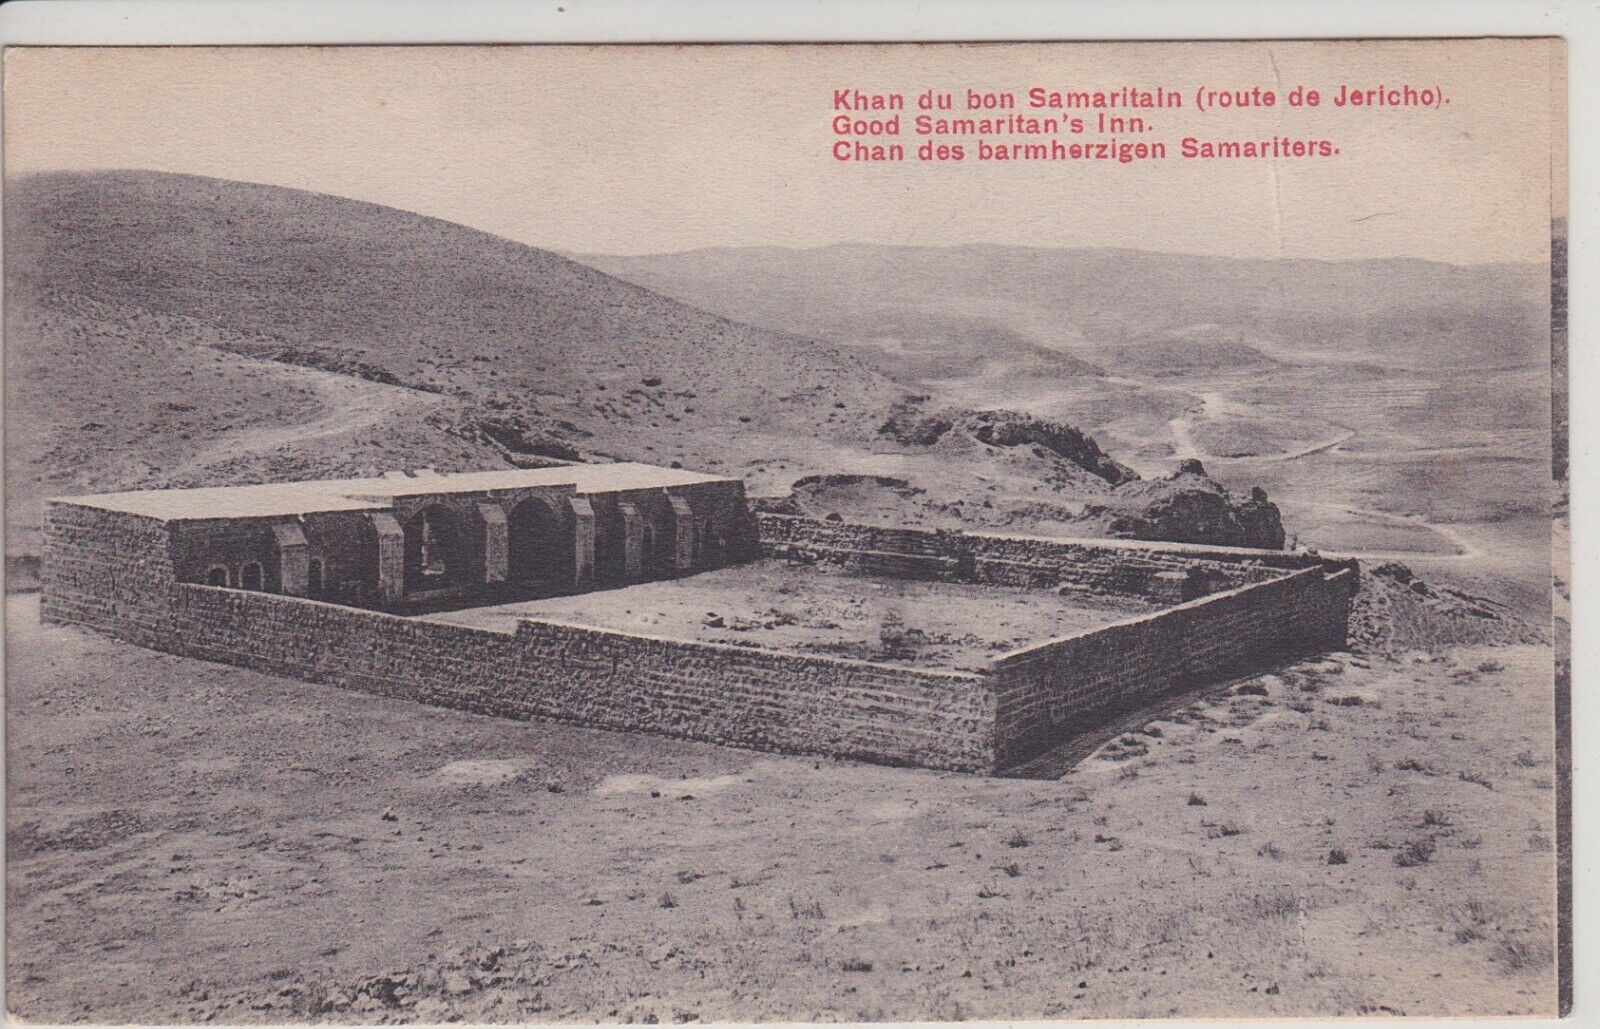 Jericho, Israel. Good Samaritan's Inn. Antique Postcard.